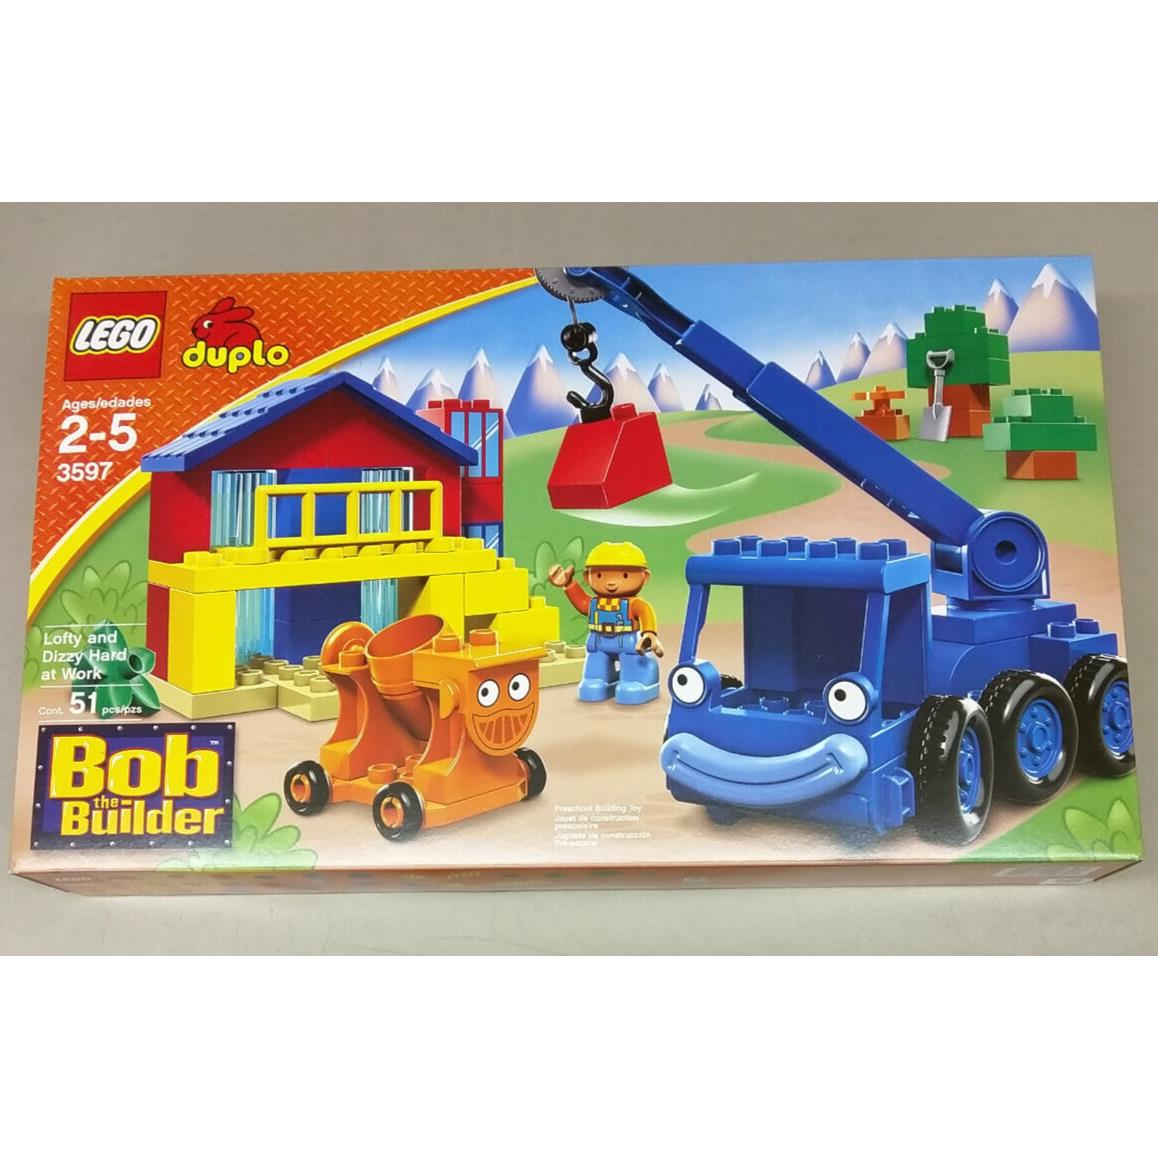 Lego Duplo Bob The Builder 3597 Lofty and Dizzy Hard at Work Crane Mixer